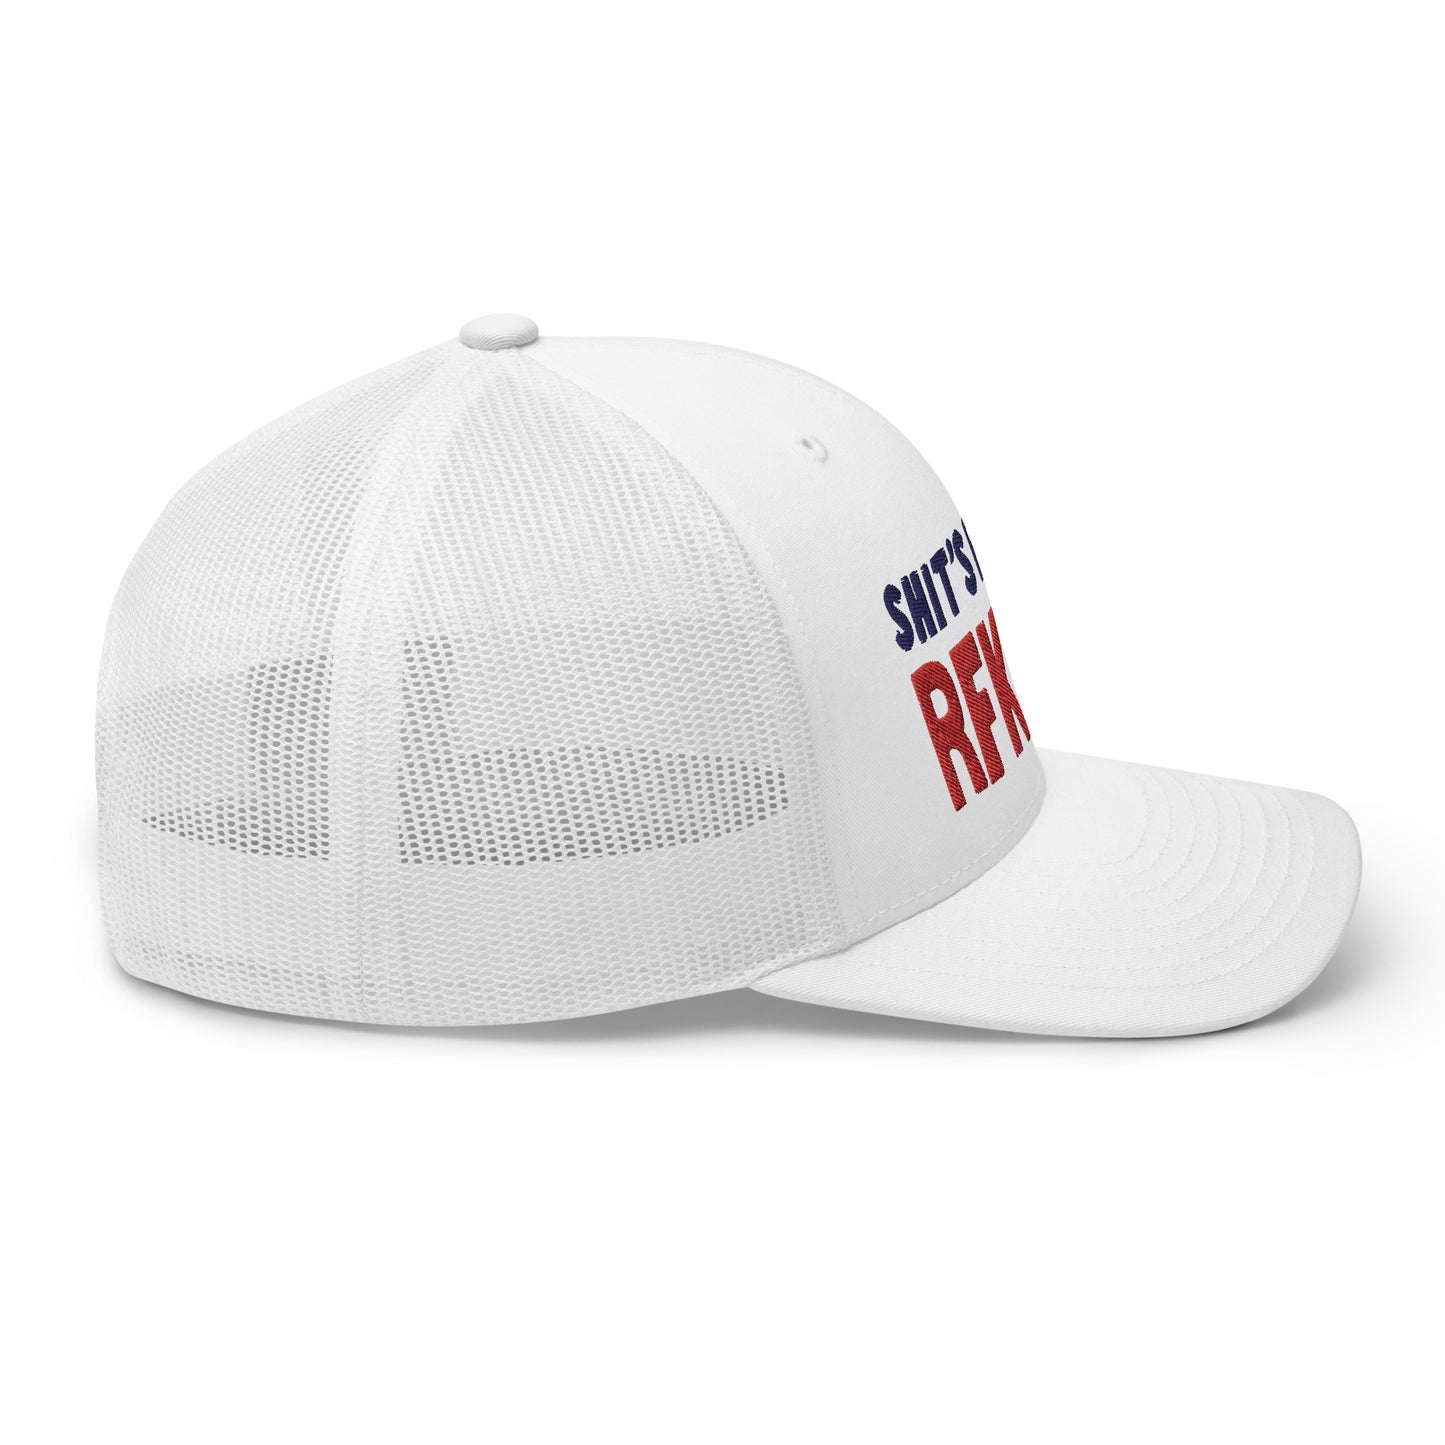 RFK hat joke, it says shits fucked RFK 24, hilarious clothing and apparel store image, political clothing, biden jokes, trump jokes